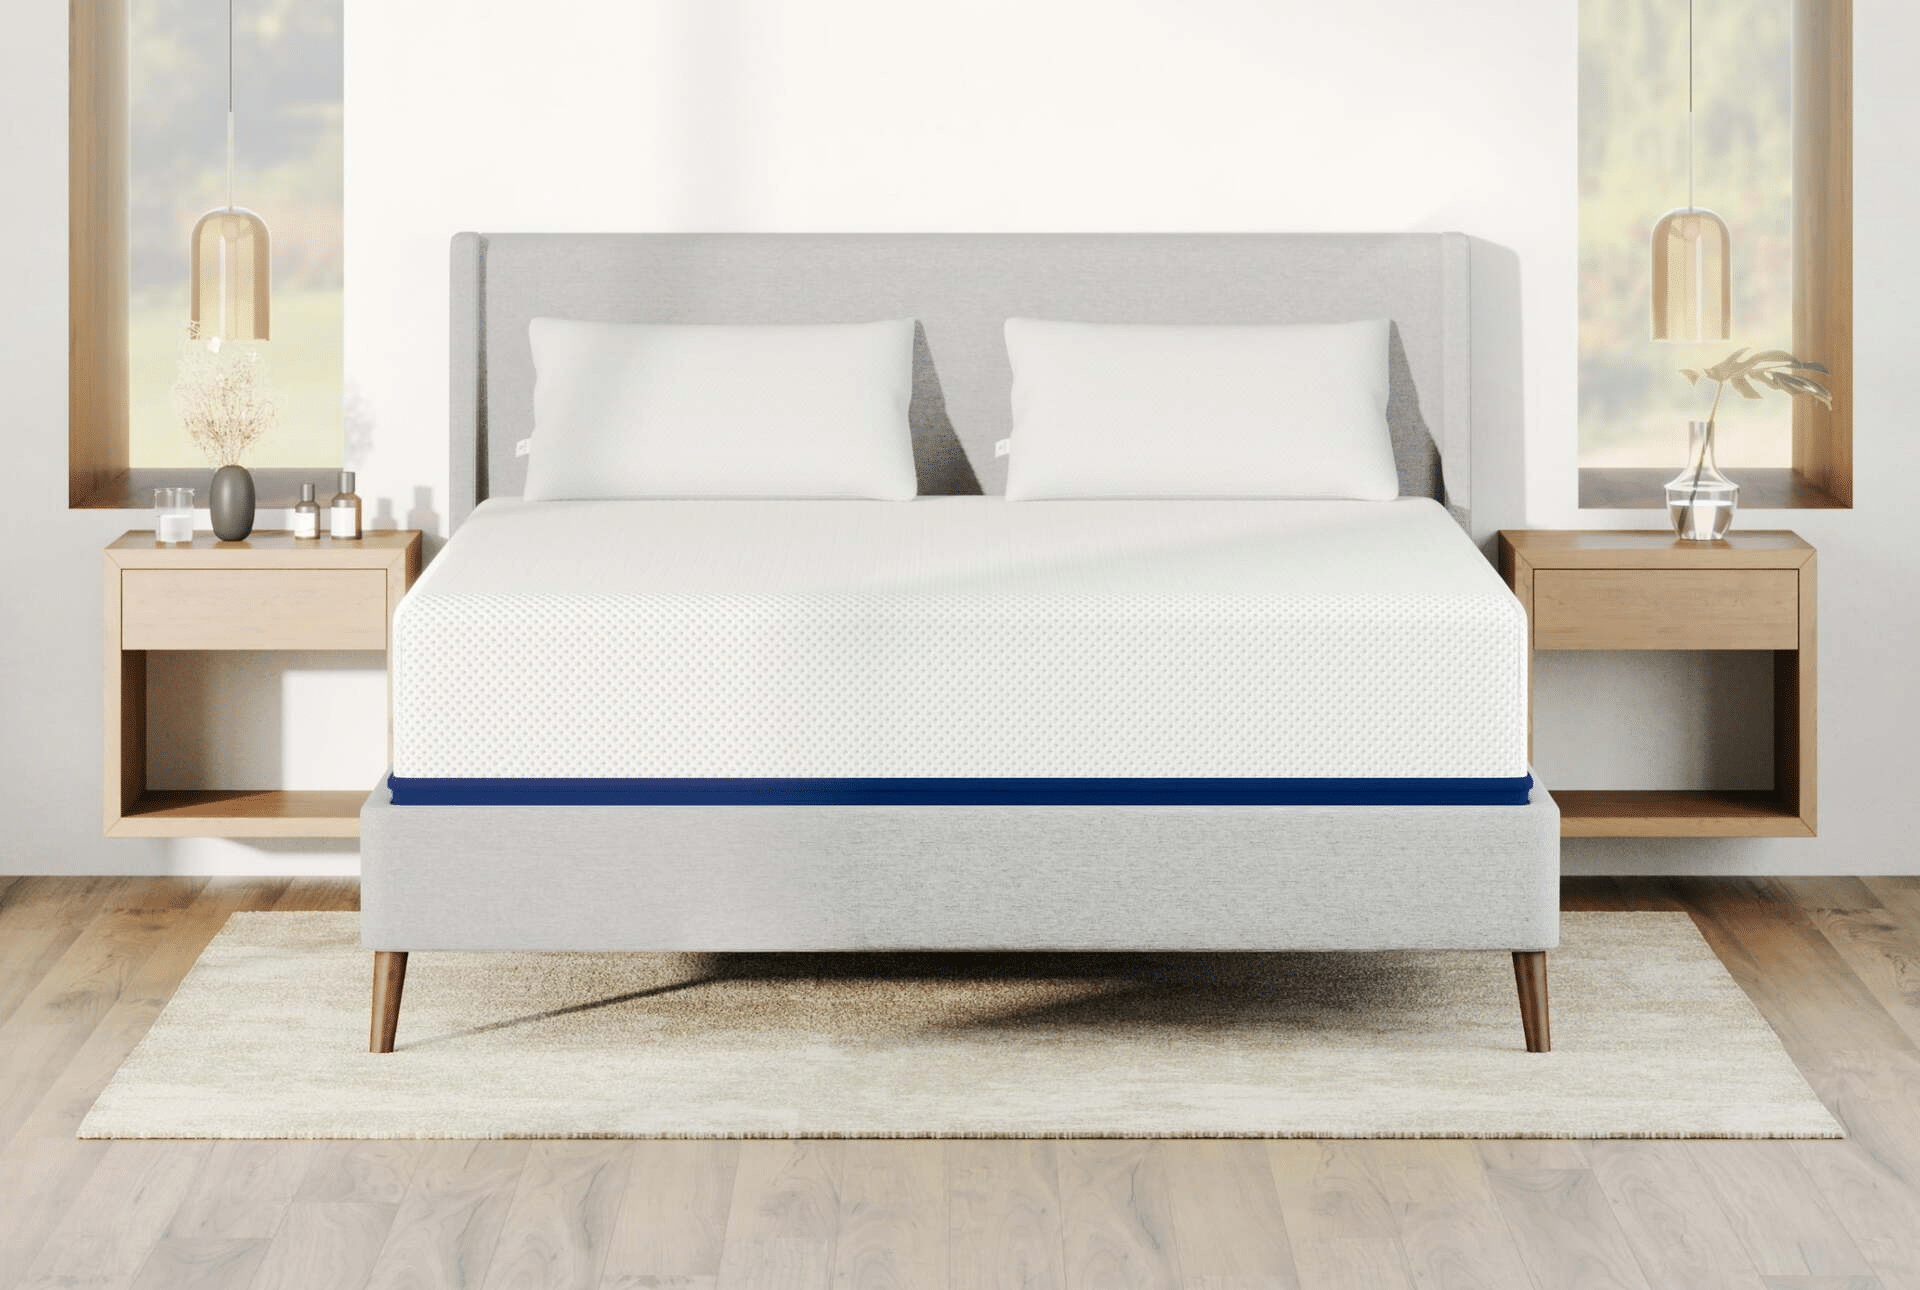 AS5 mattress amerisleep